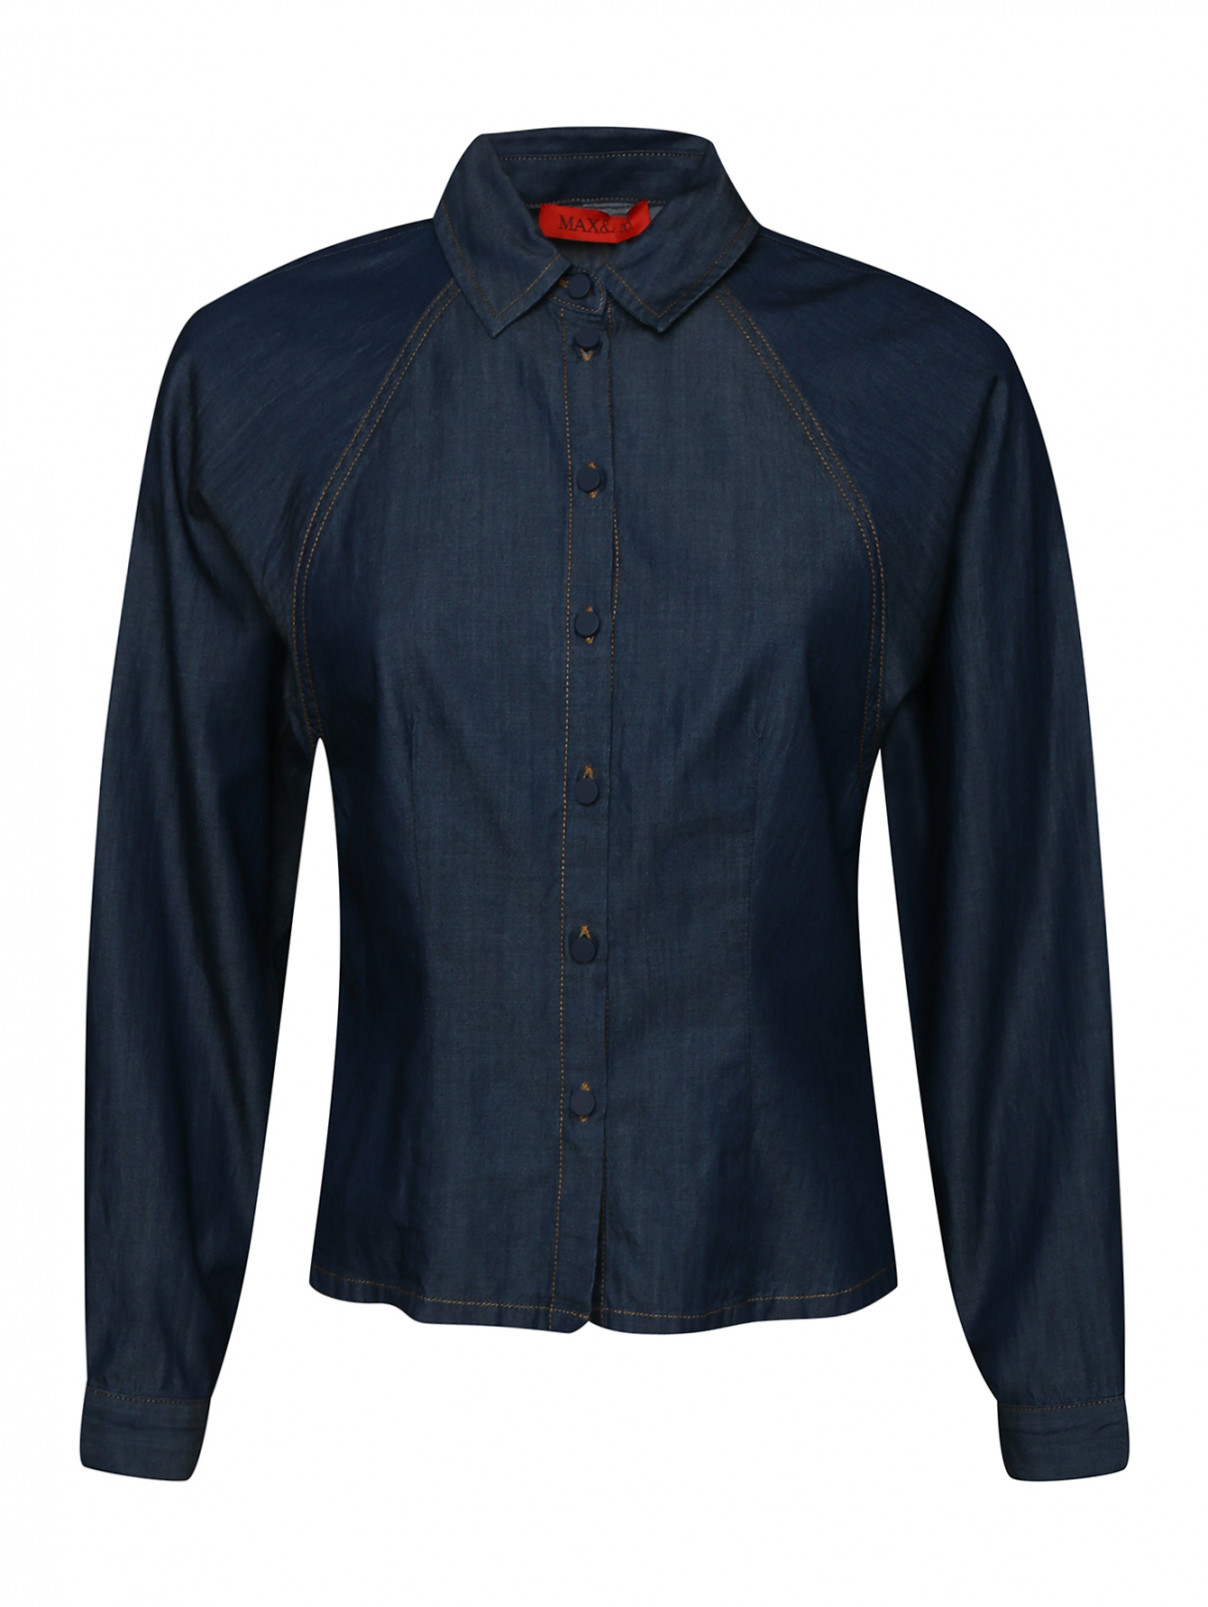 Блуза из денима Max&Co  –  Общий вид  – Цвет:  Синий